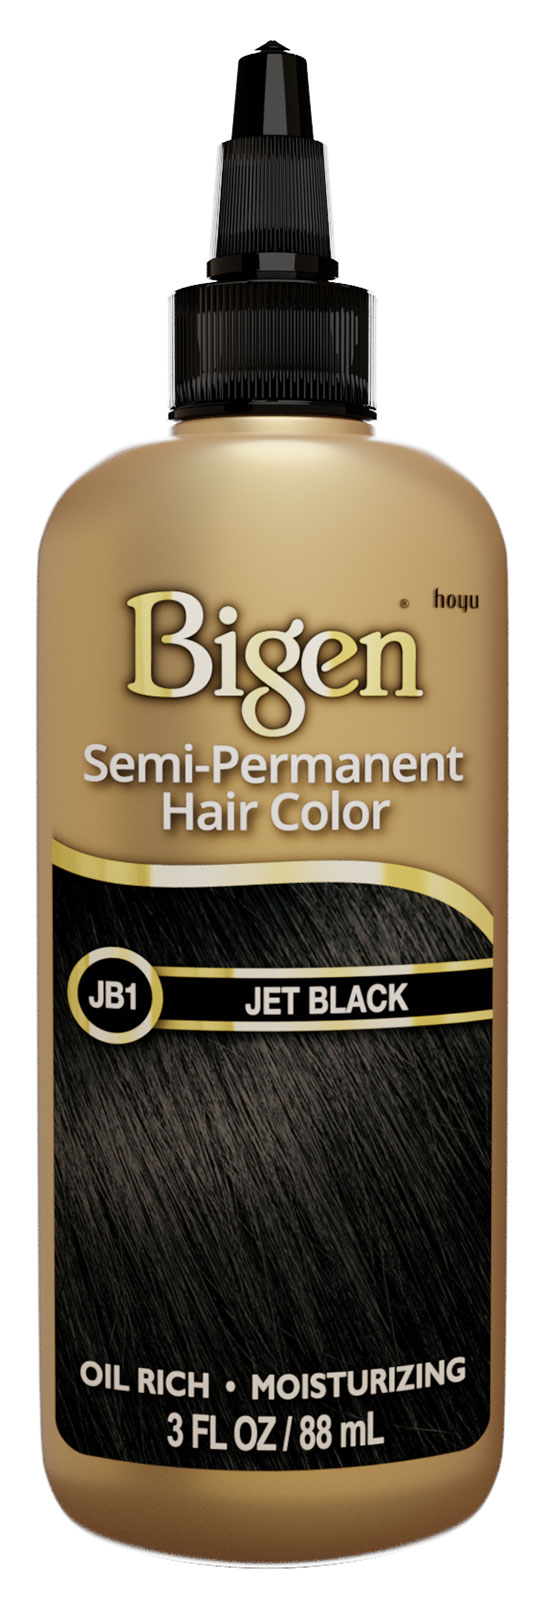 JB1-Jet Black